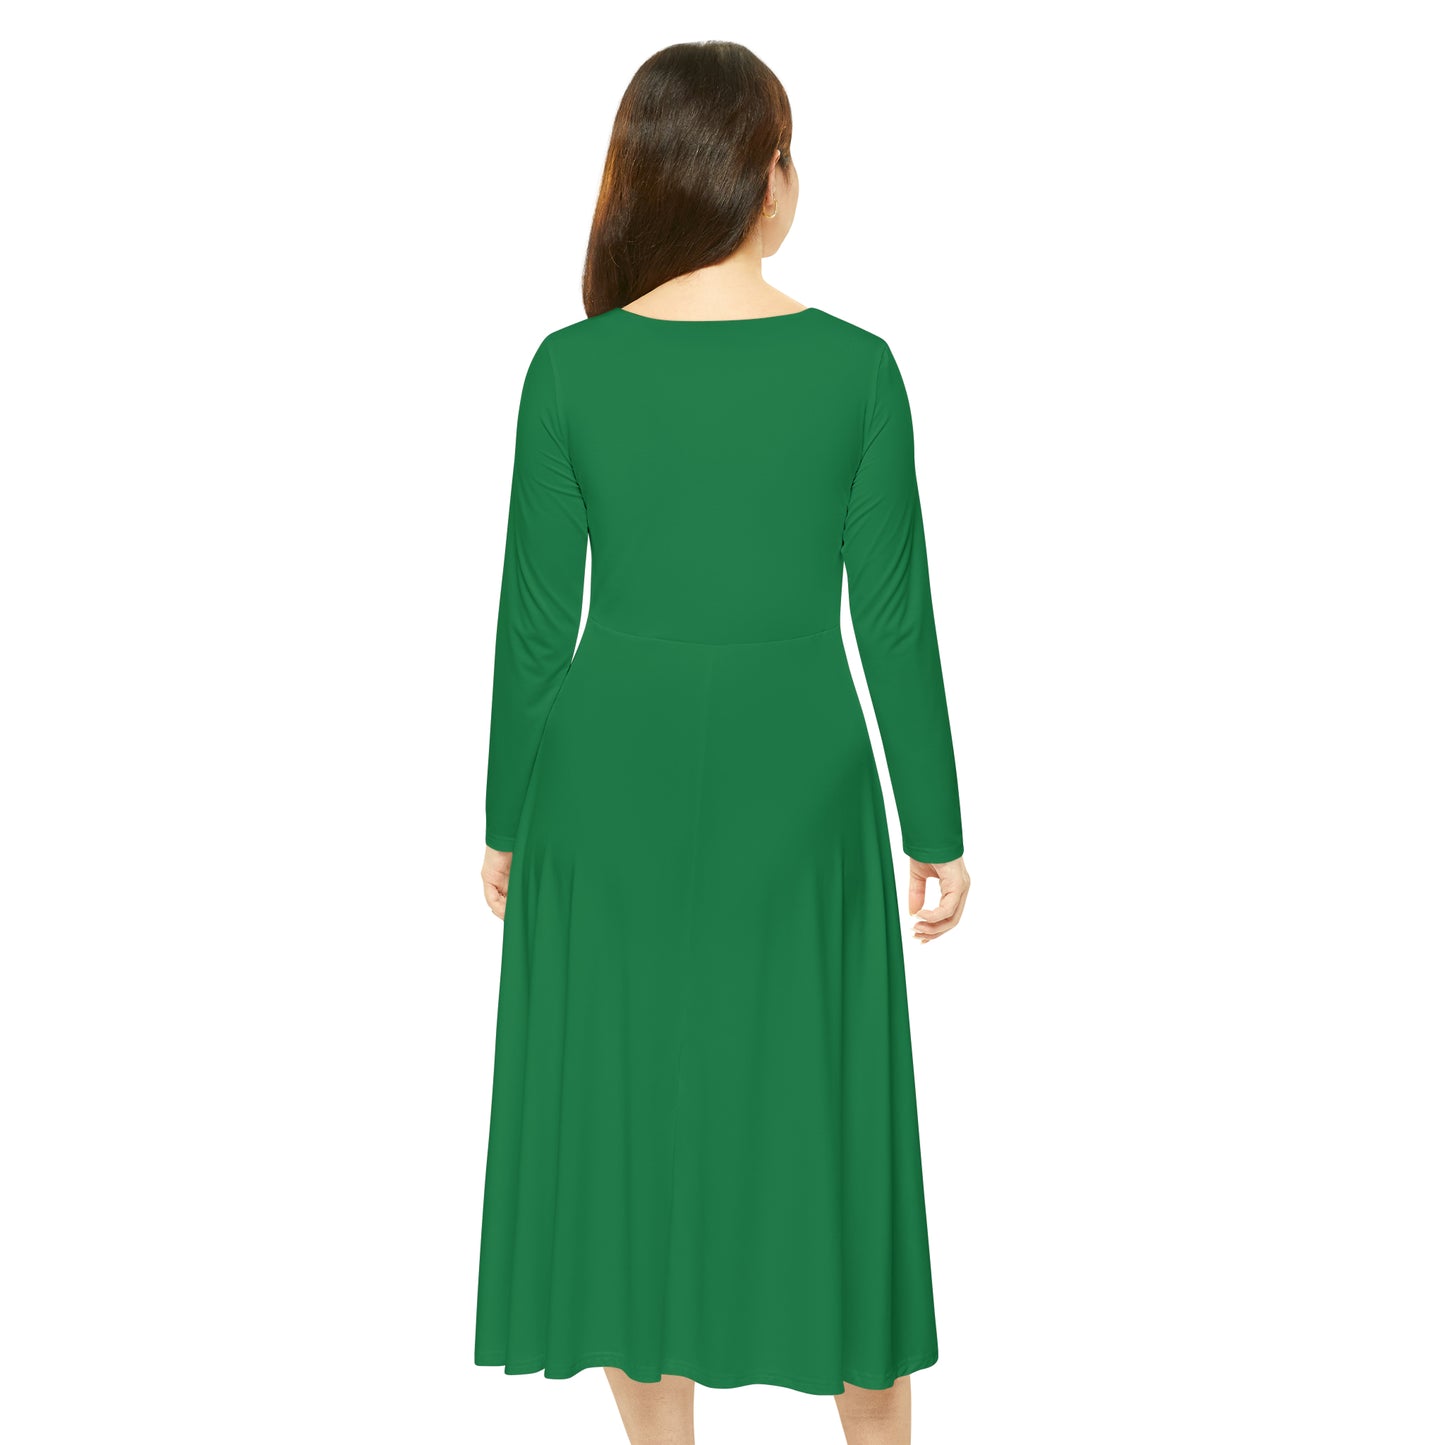 FOFMI WORLD CONVENTION 2023 Women's Long Sleeve Dress (Green)